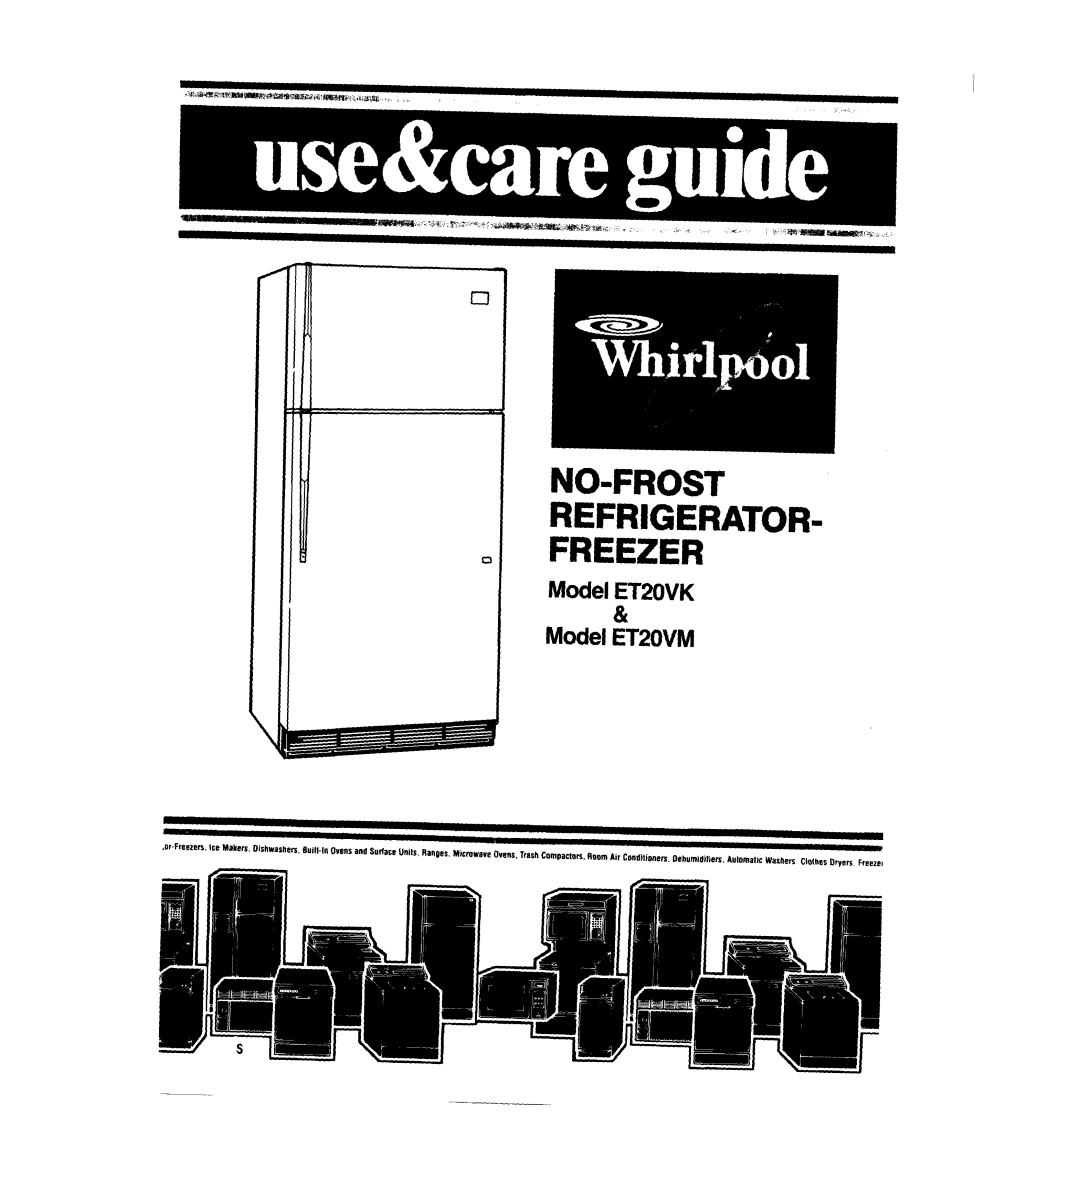 Whirlpool manual Model ETZOVK & Model ET20VM, No-Frostrefrigerator- Freezer 